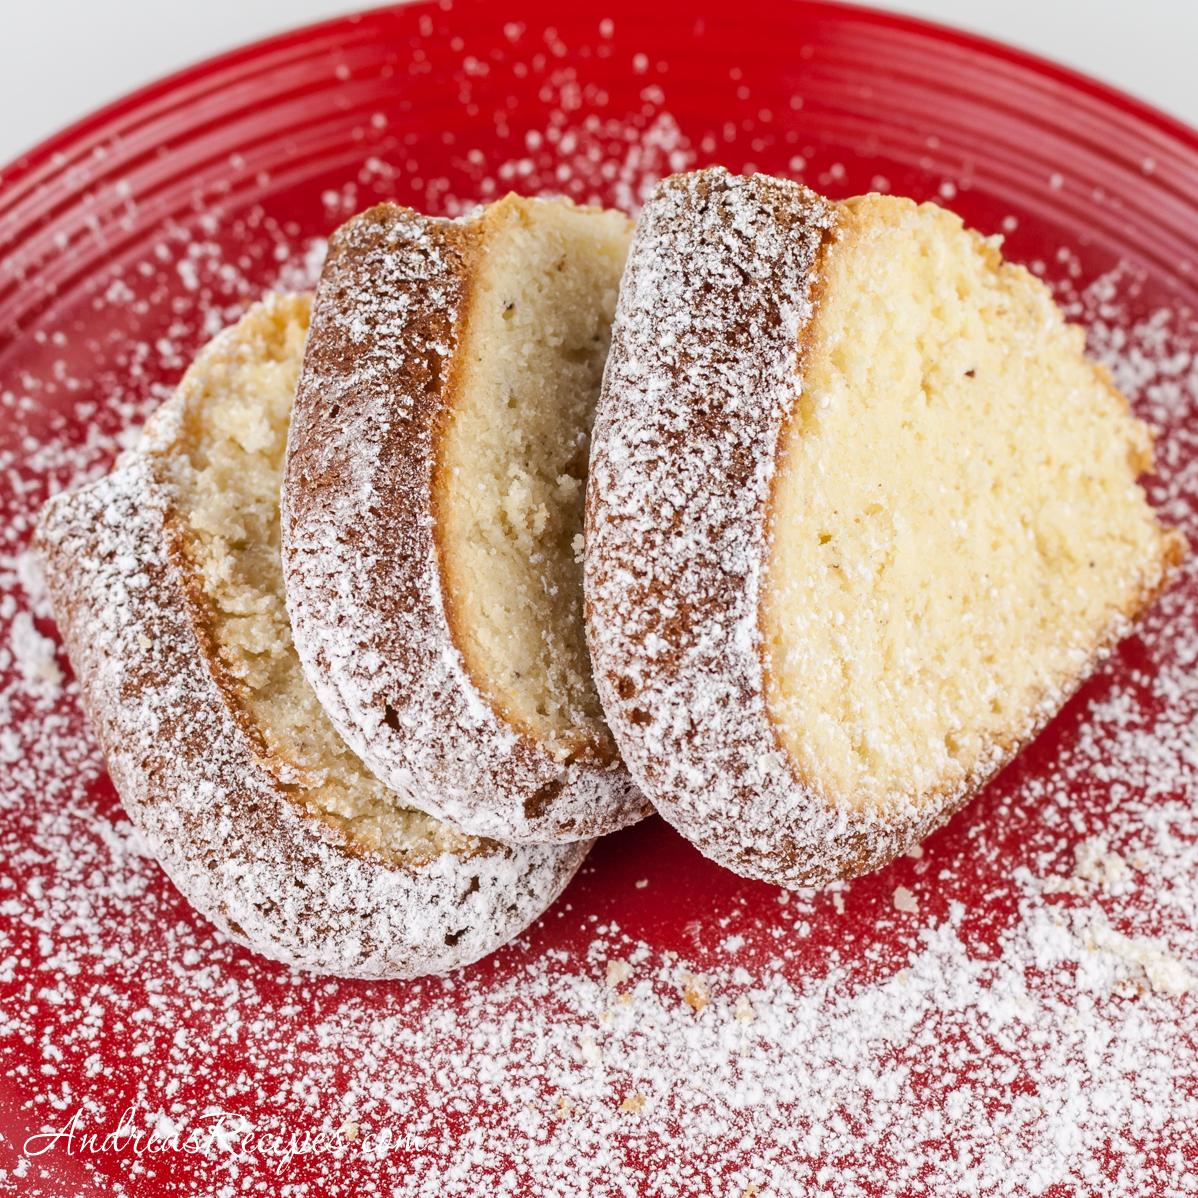 Sure, here are 11 unique photo captions for the Andrea's Pound Cake Recipe: